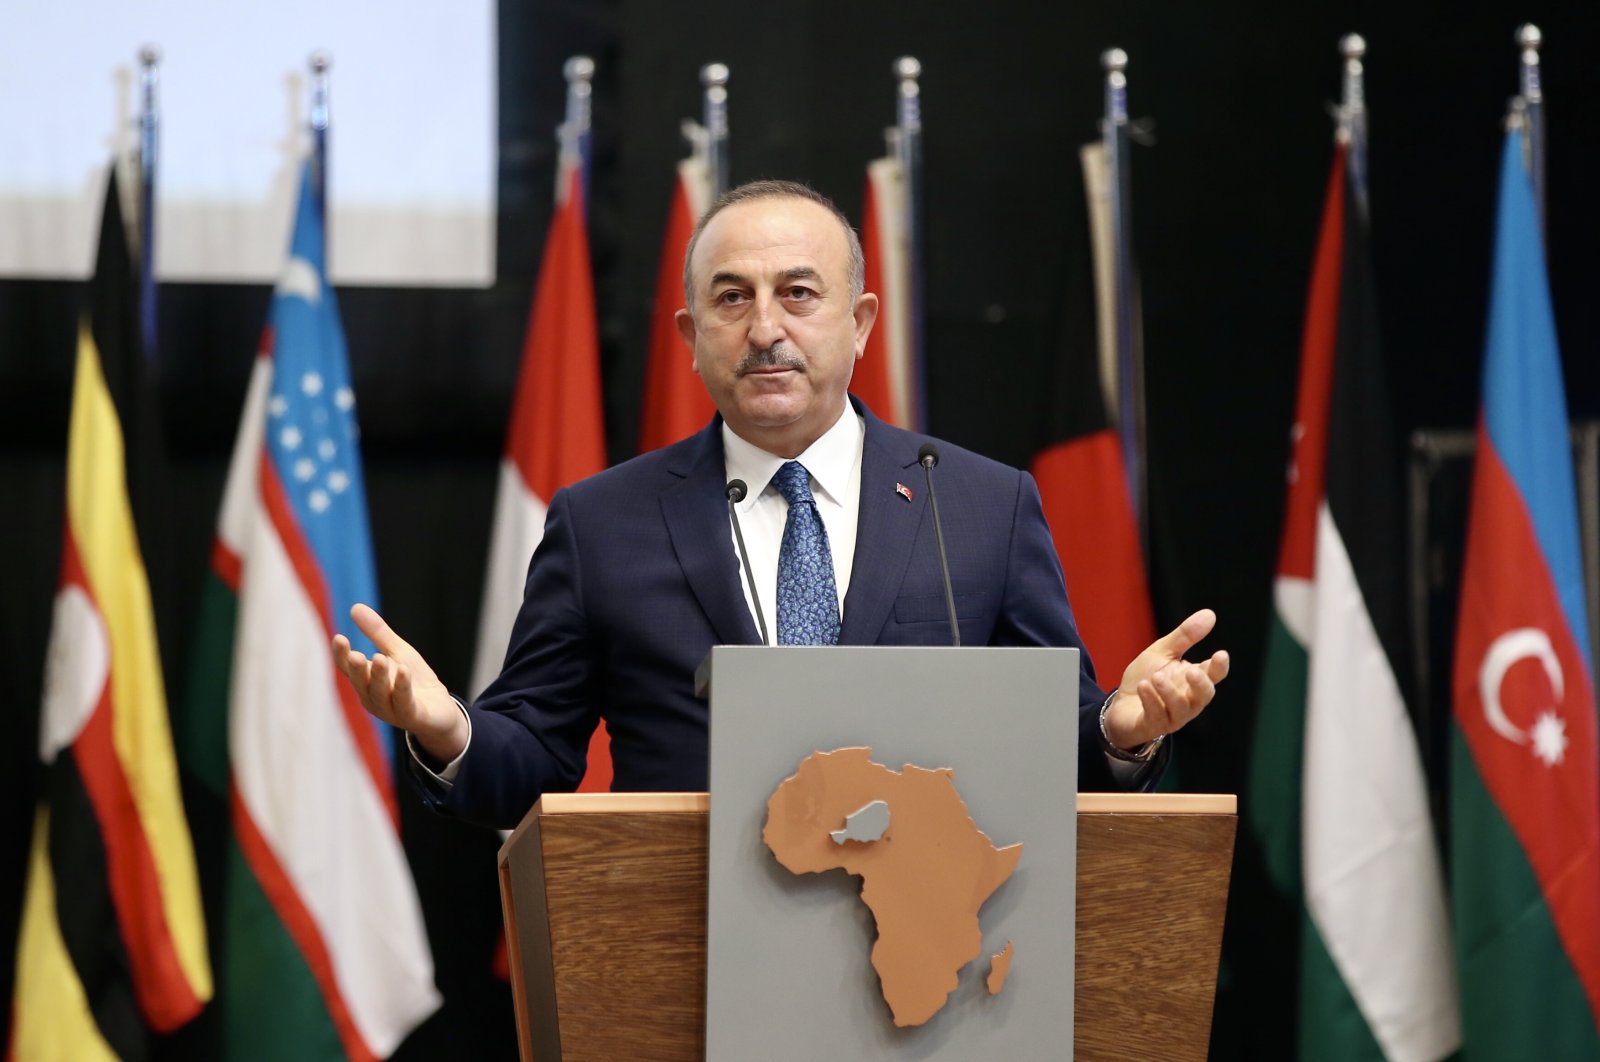 Foreign Minister Mevlüt Çavuşoğlu speaks at a conference in Niger, Nov. 27, 2020. (AA Photo)